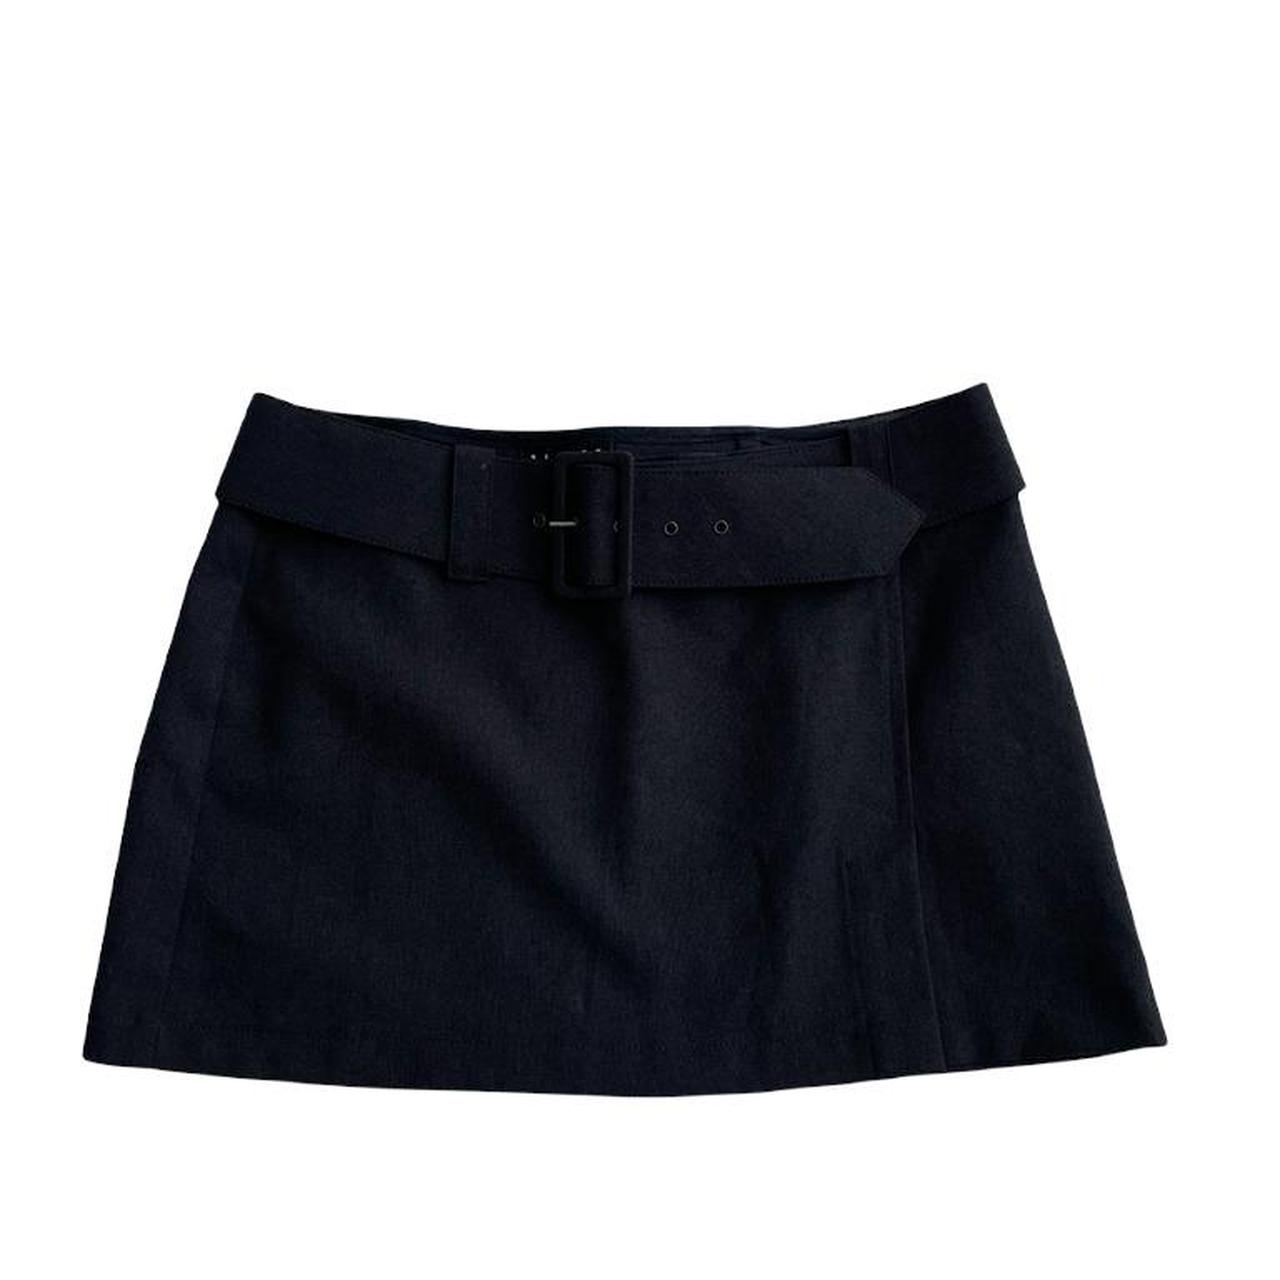 Y2K mini skirt in dark grey graphite color ️‍🔥 vintage... - Depop